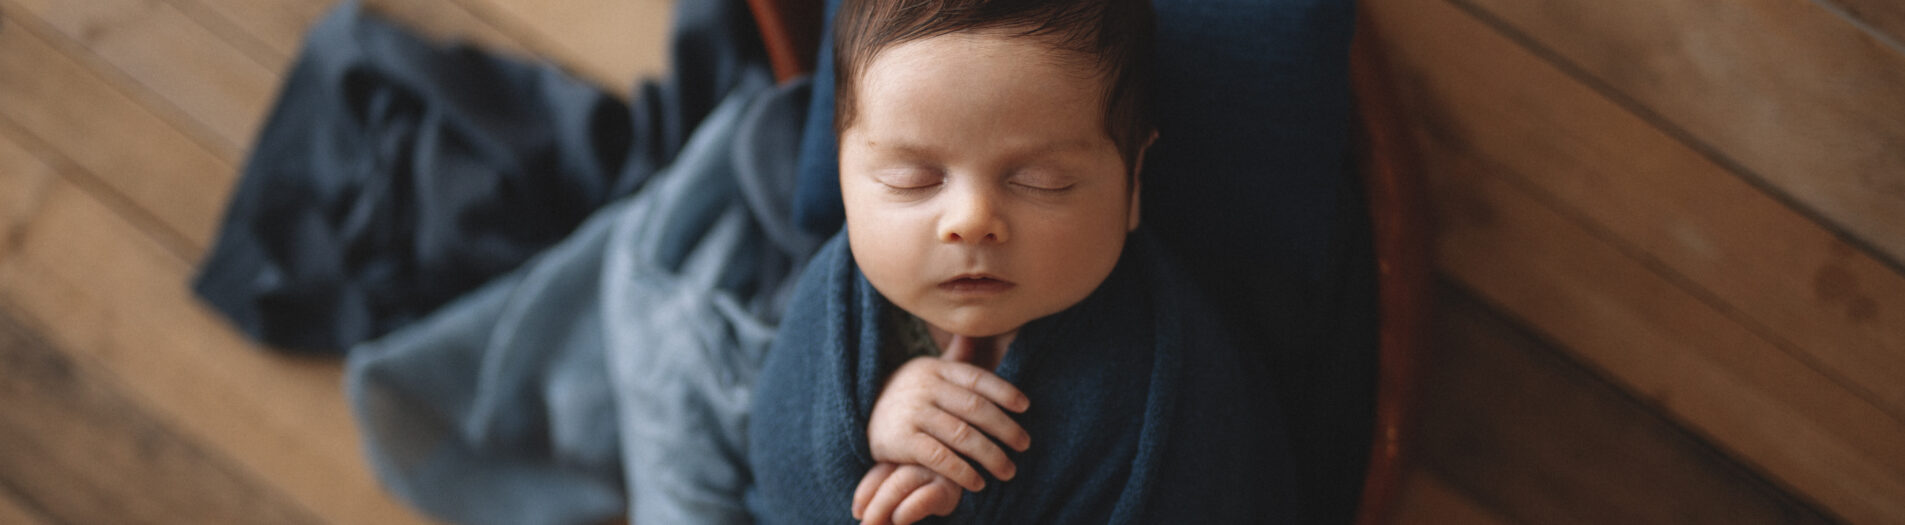 Leonardo newborn